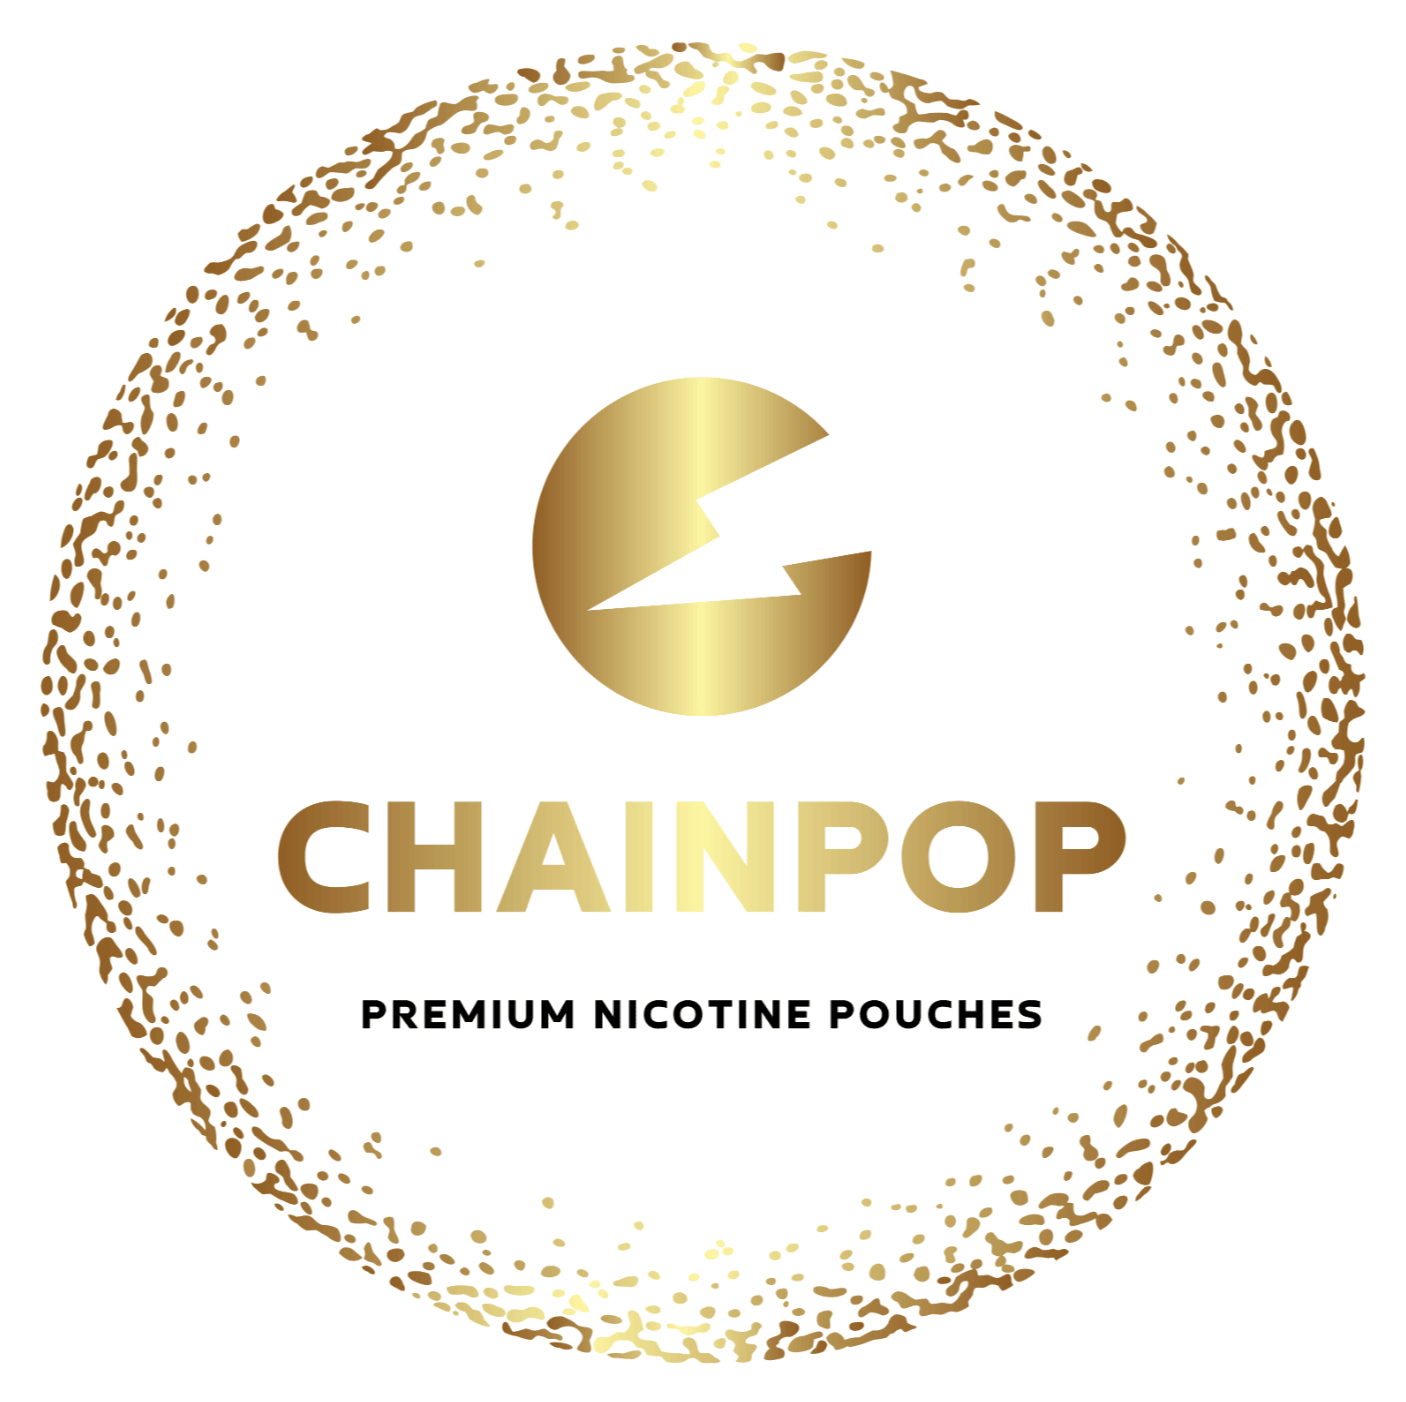 Chainpop Nicotine Pouches logo